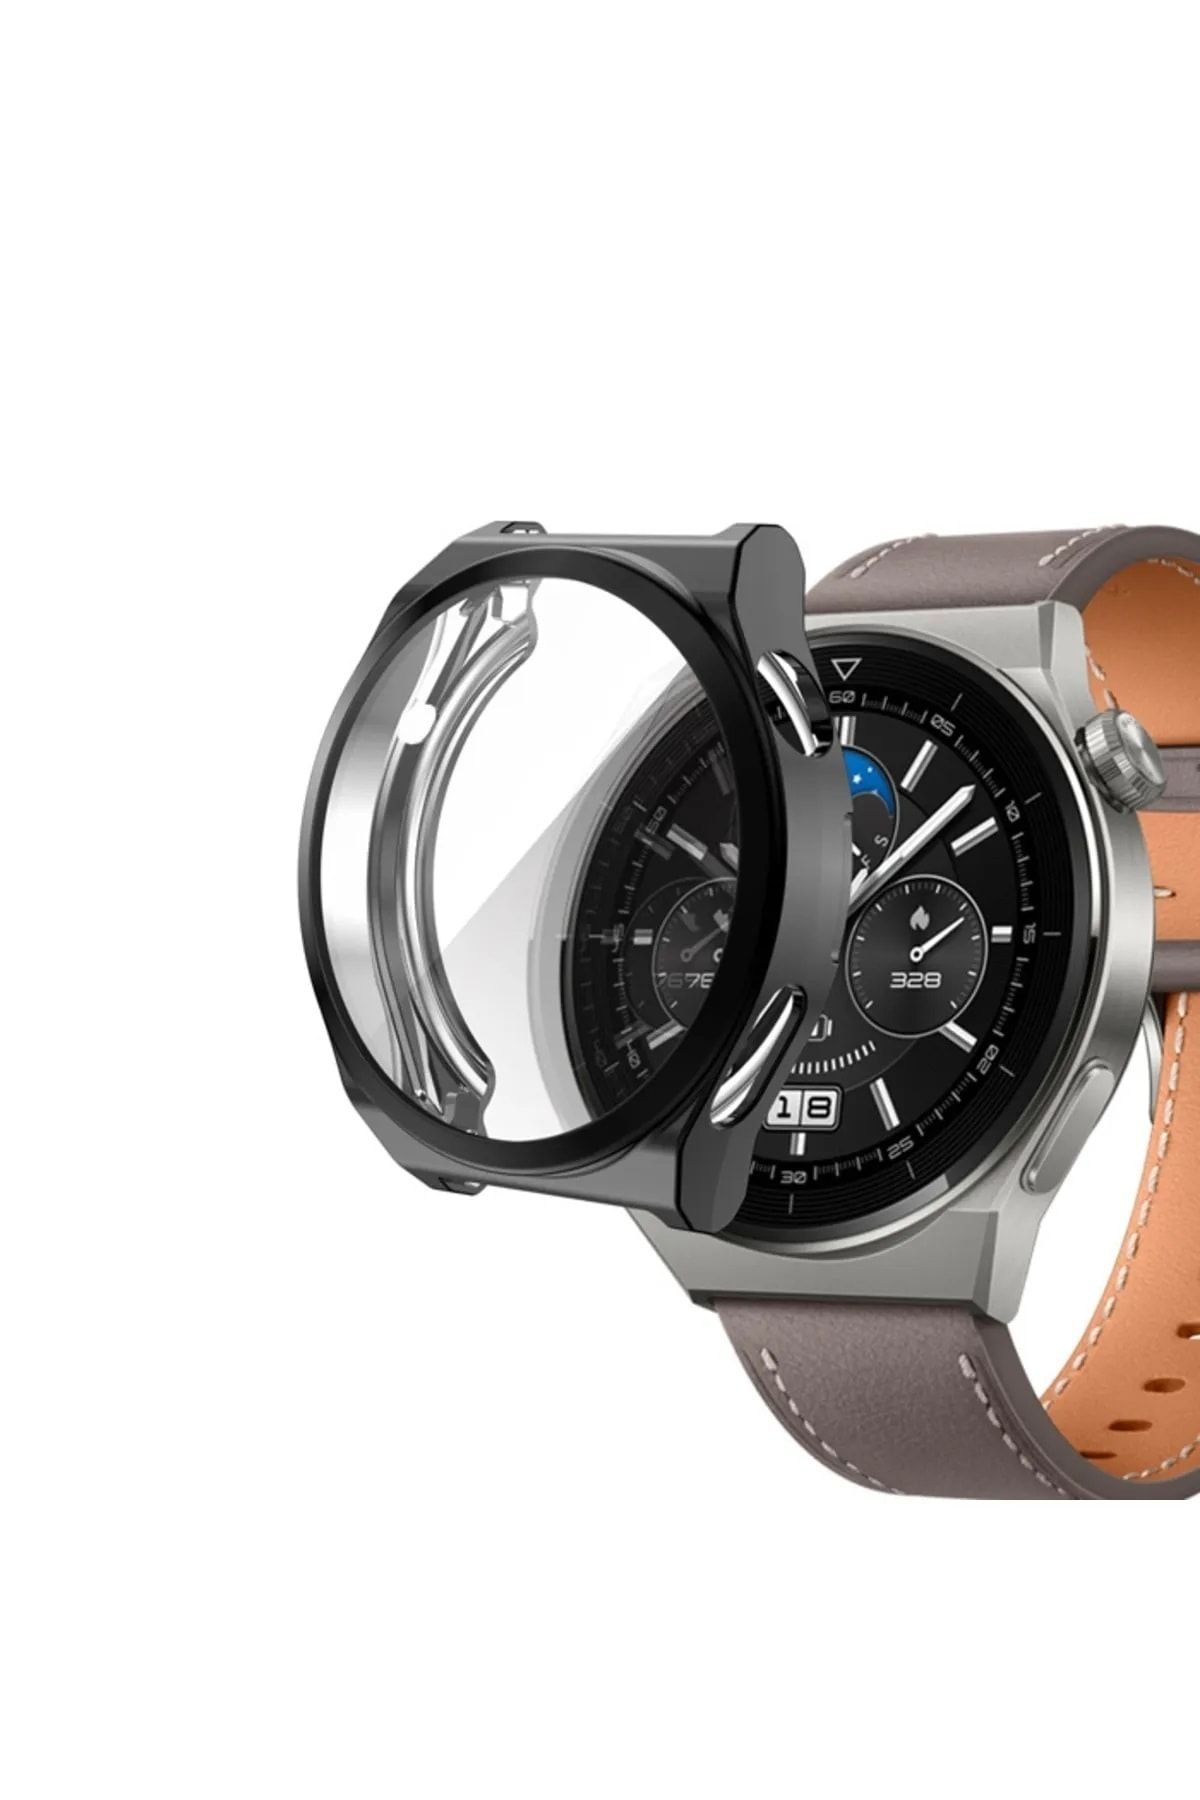 Tagomoon Huawei Watch Gt3 Pro 46mm Uyumlu Kasa Ve Ekran Koruyucu 360 Tam Koruma Silikon Kılıf